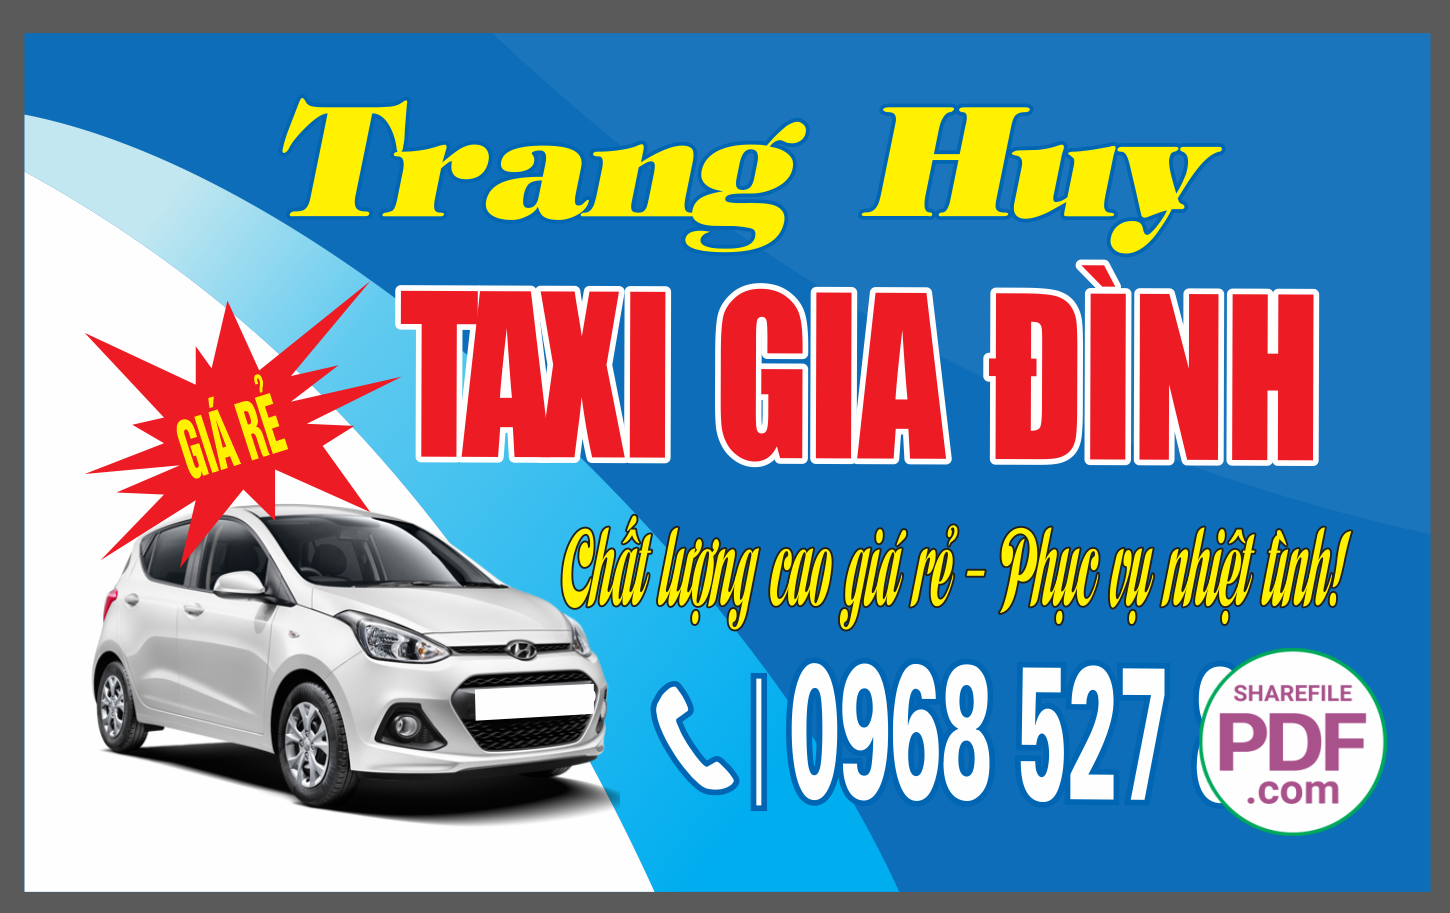 Trang Huy Taxi Gia dinh.png